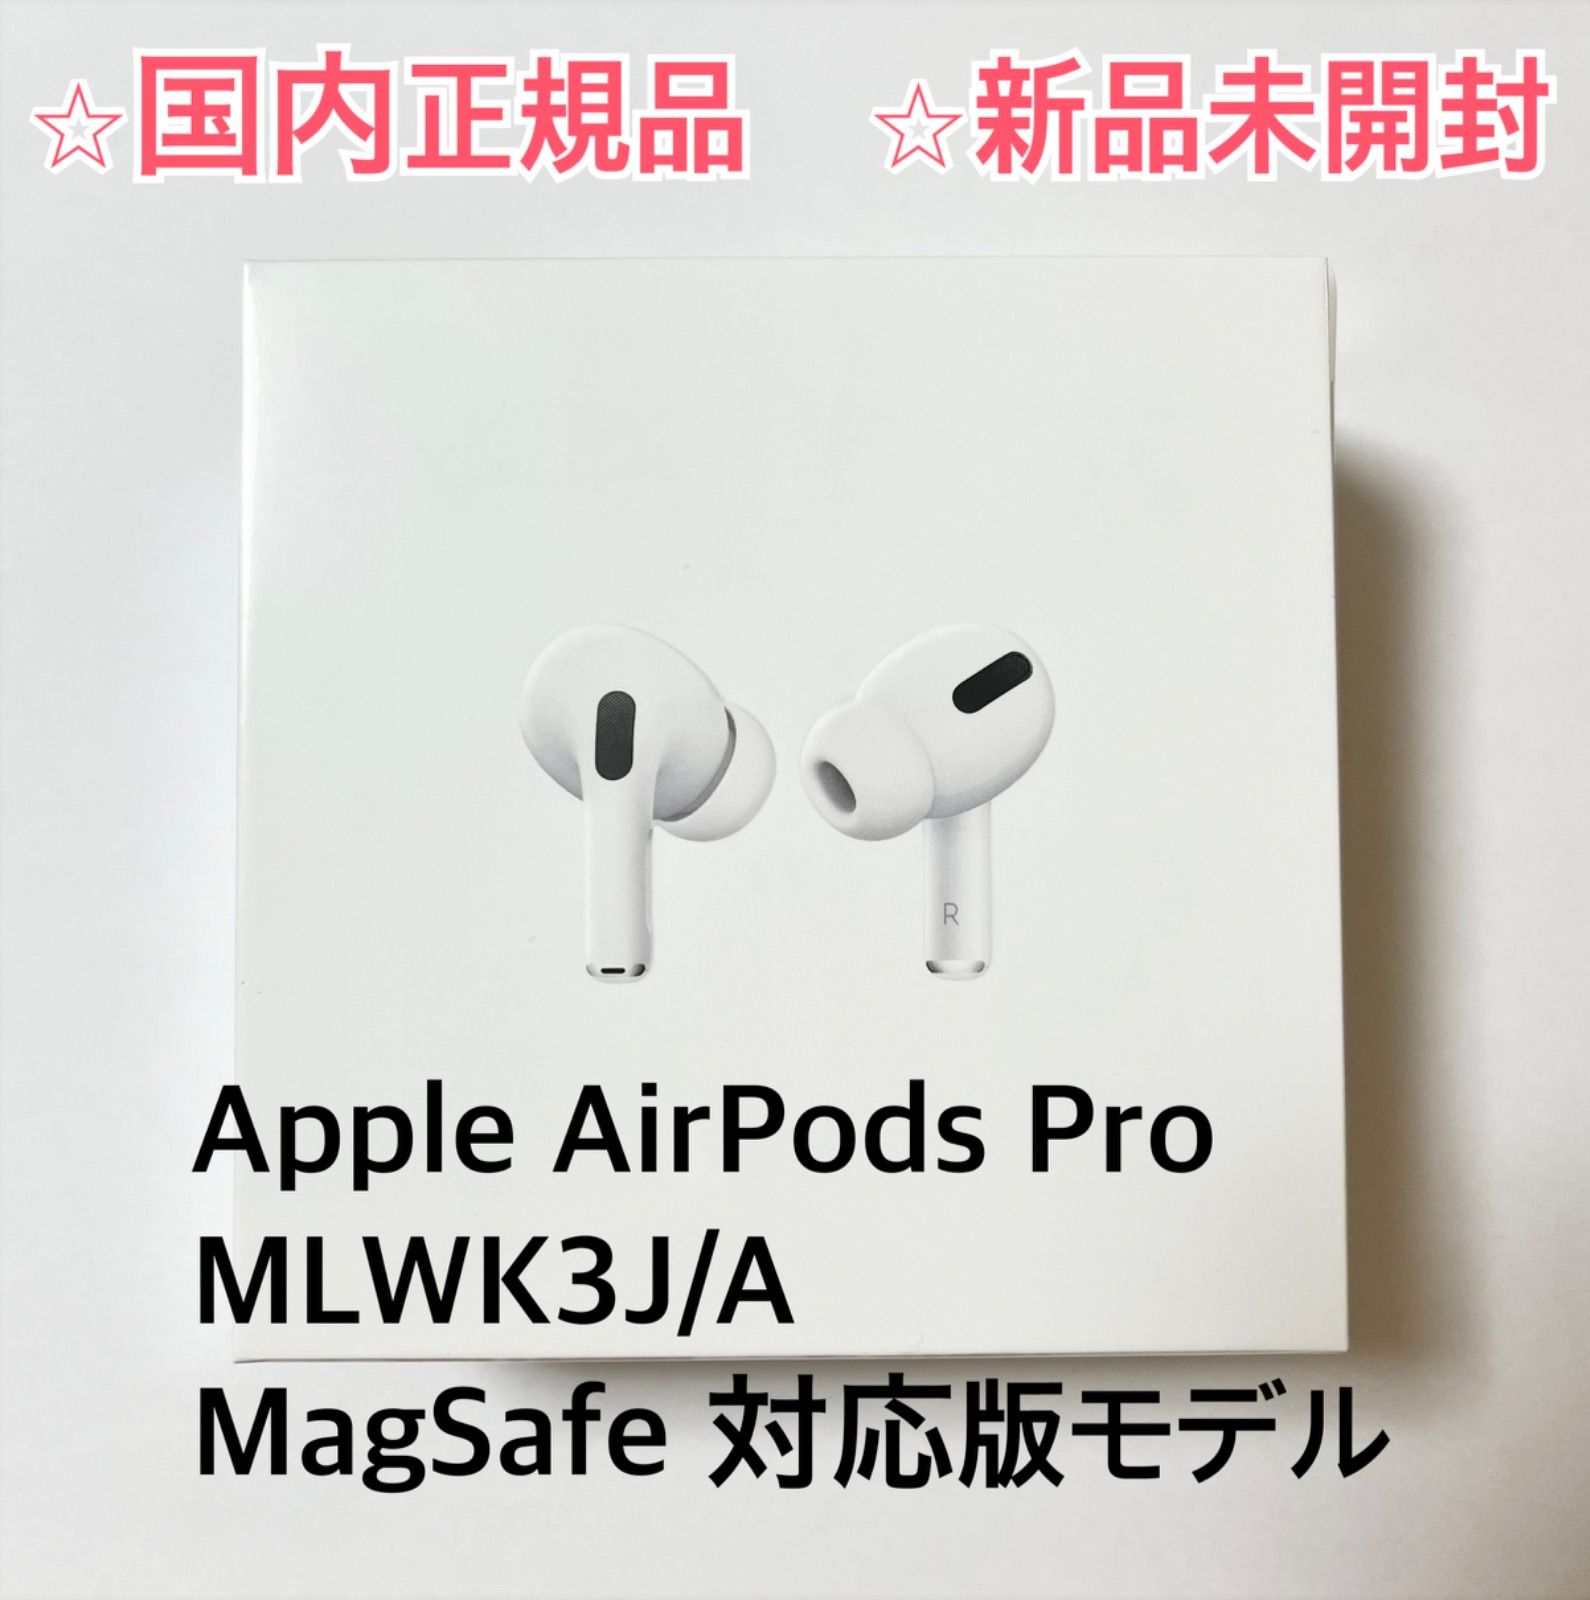 Apple Airpods (第3世代) 新品未開封